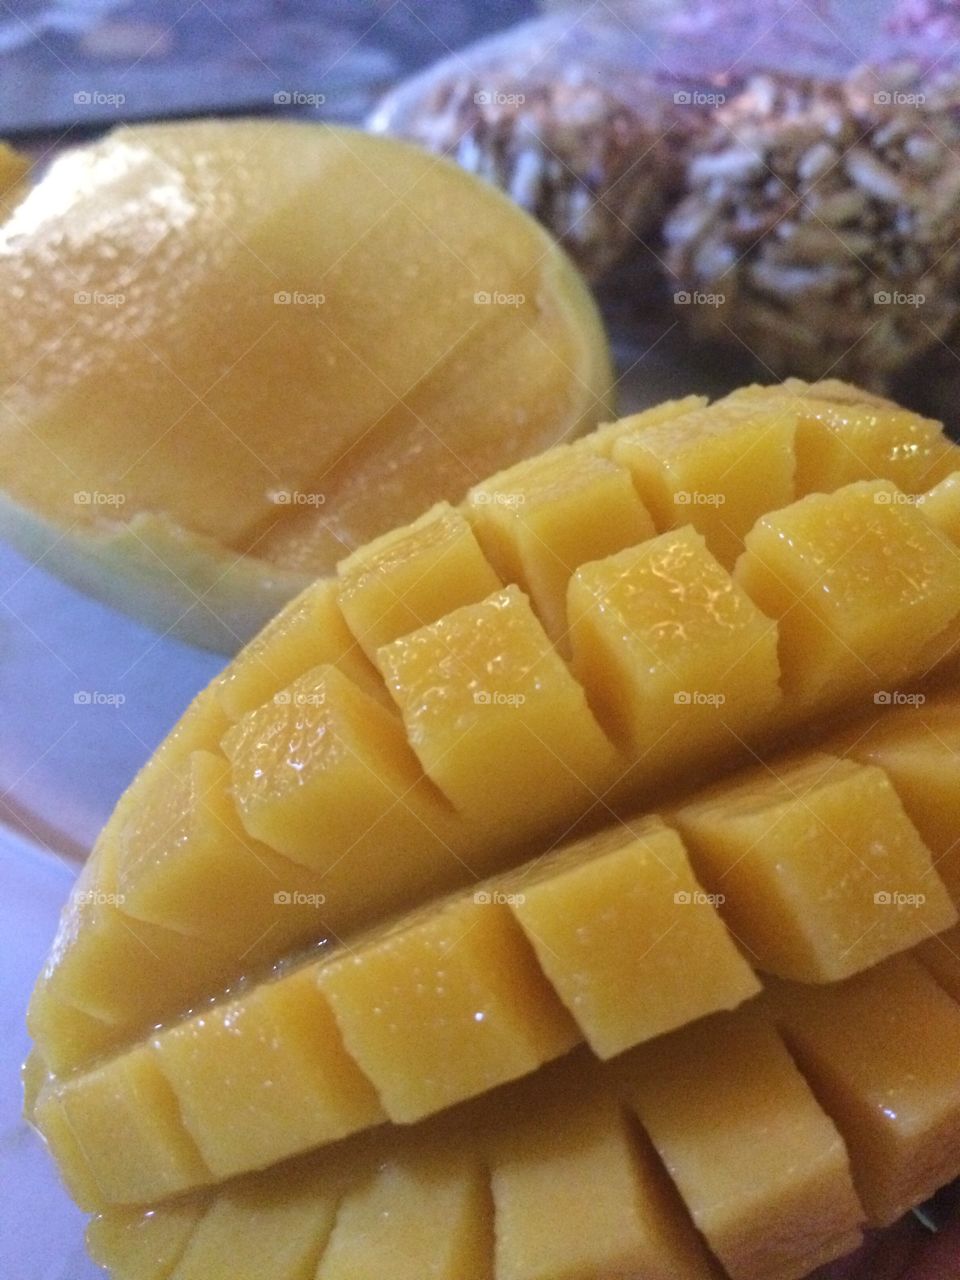 Watery sweet delicious mango fruit.